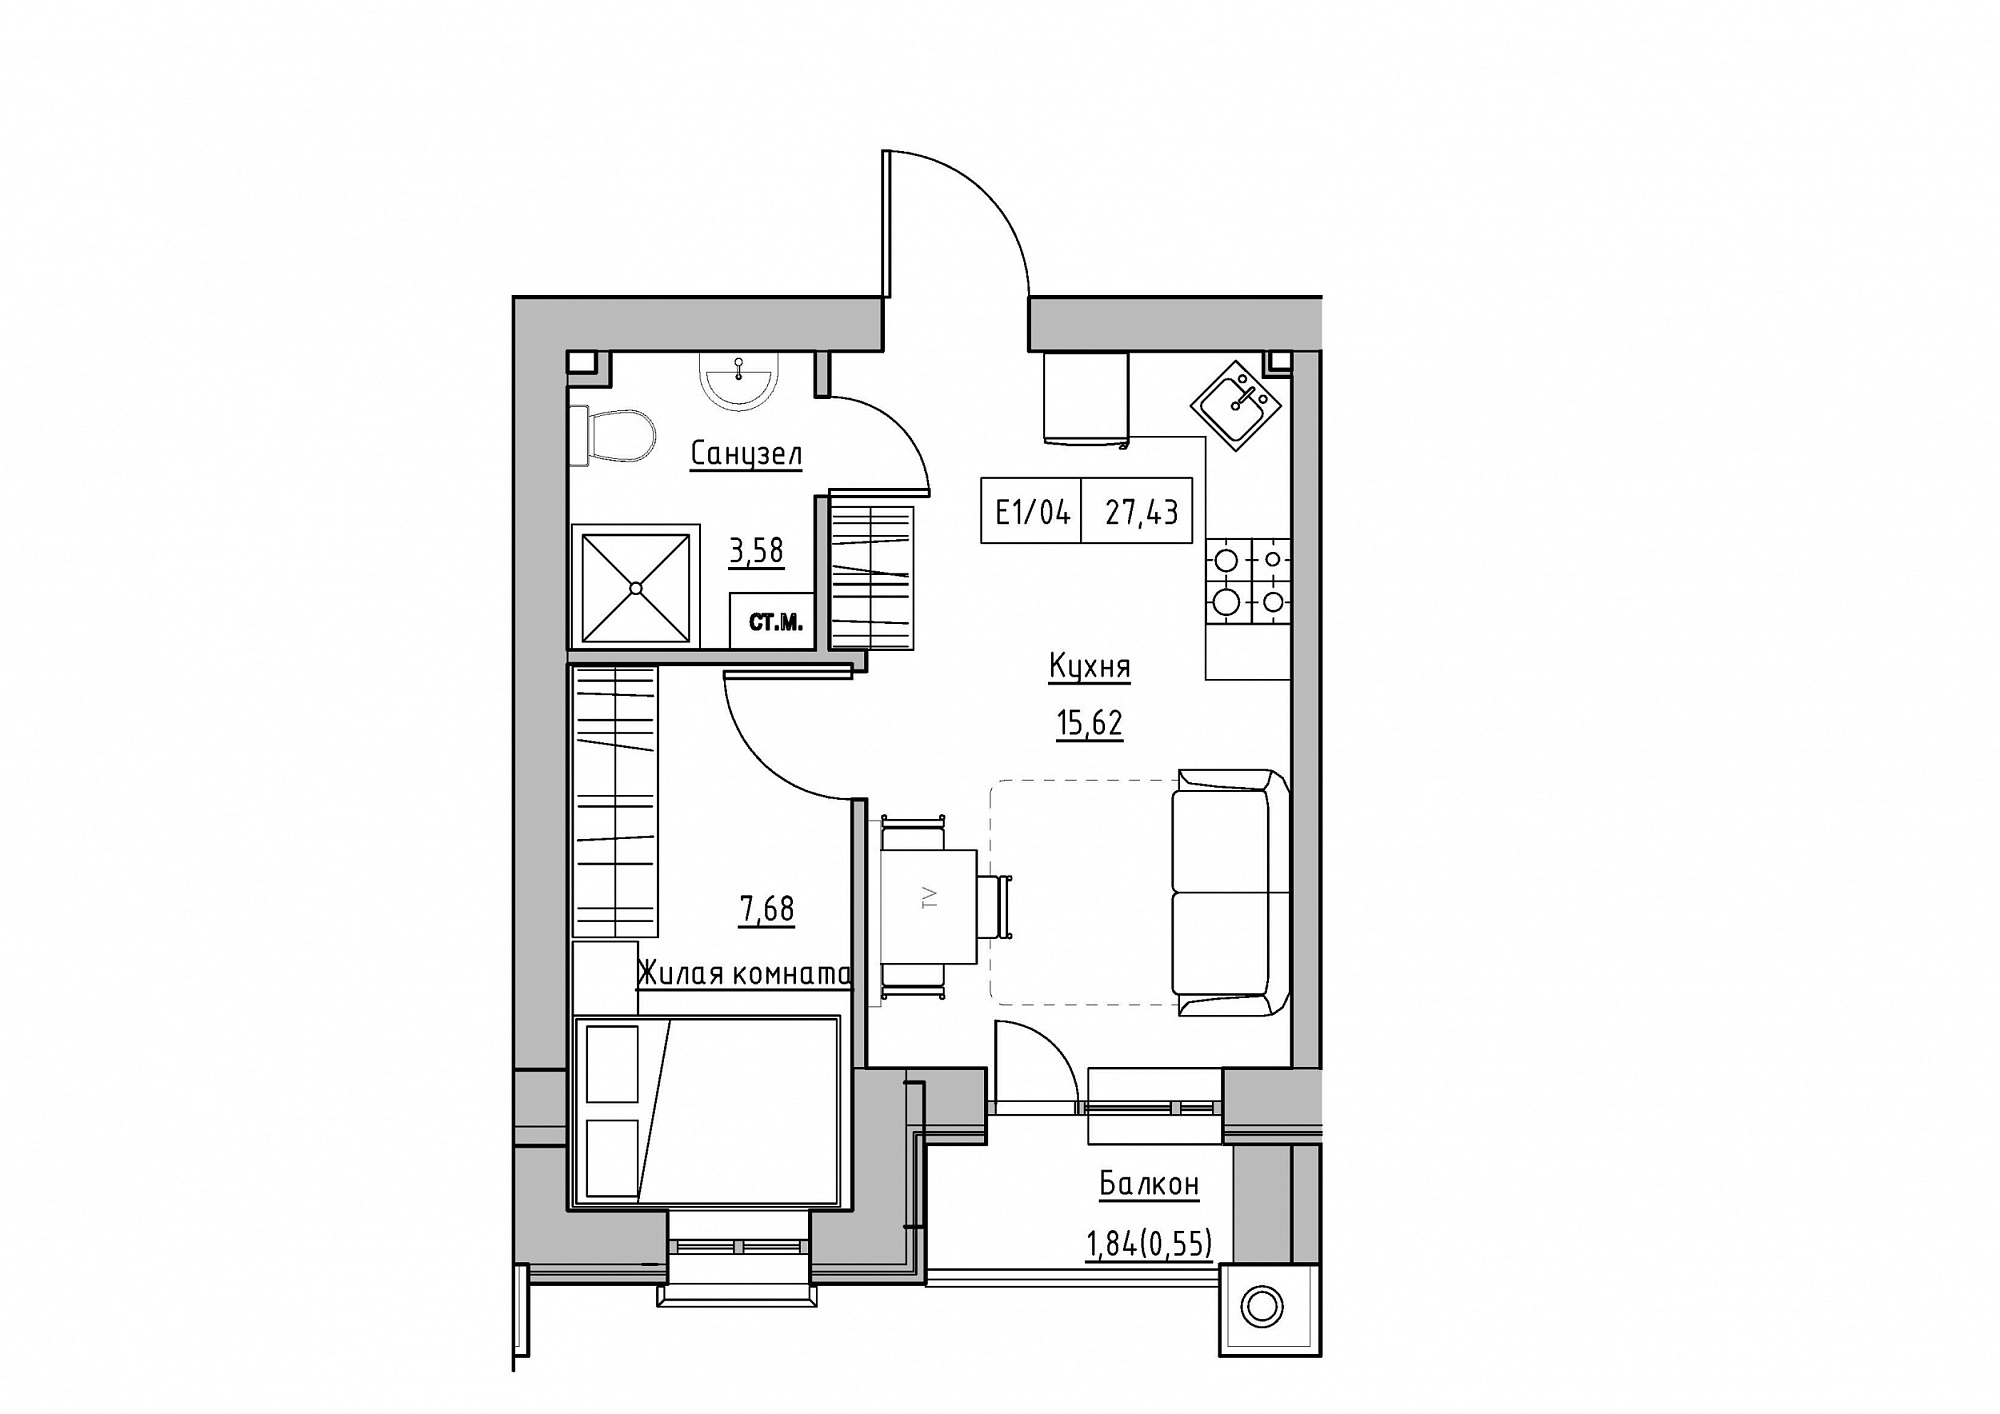 Planning 1-rm flats area 27.43m2, KS-011-05/0012.